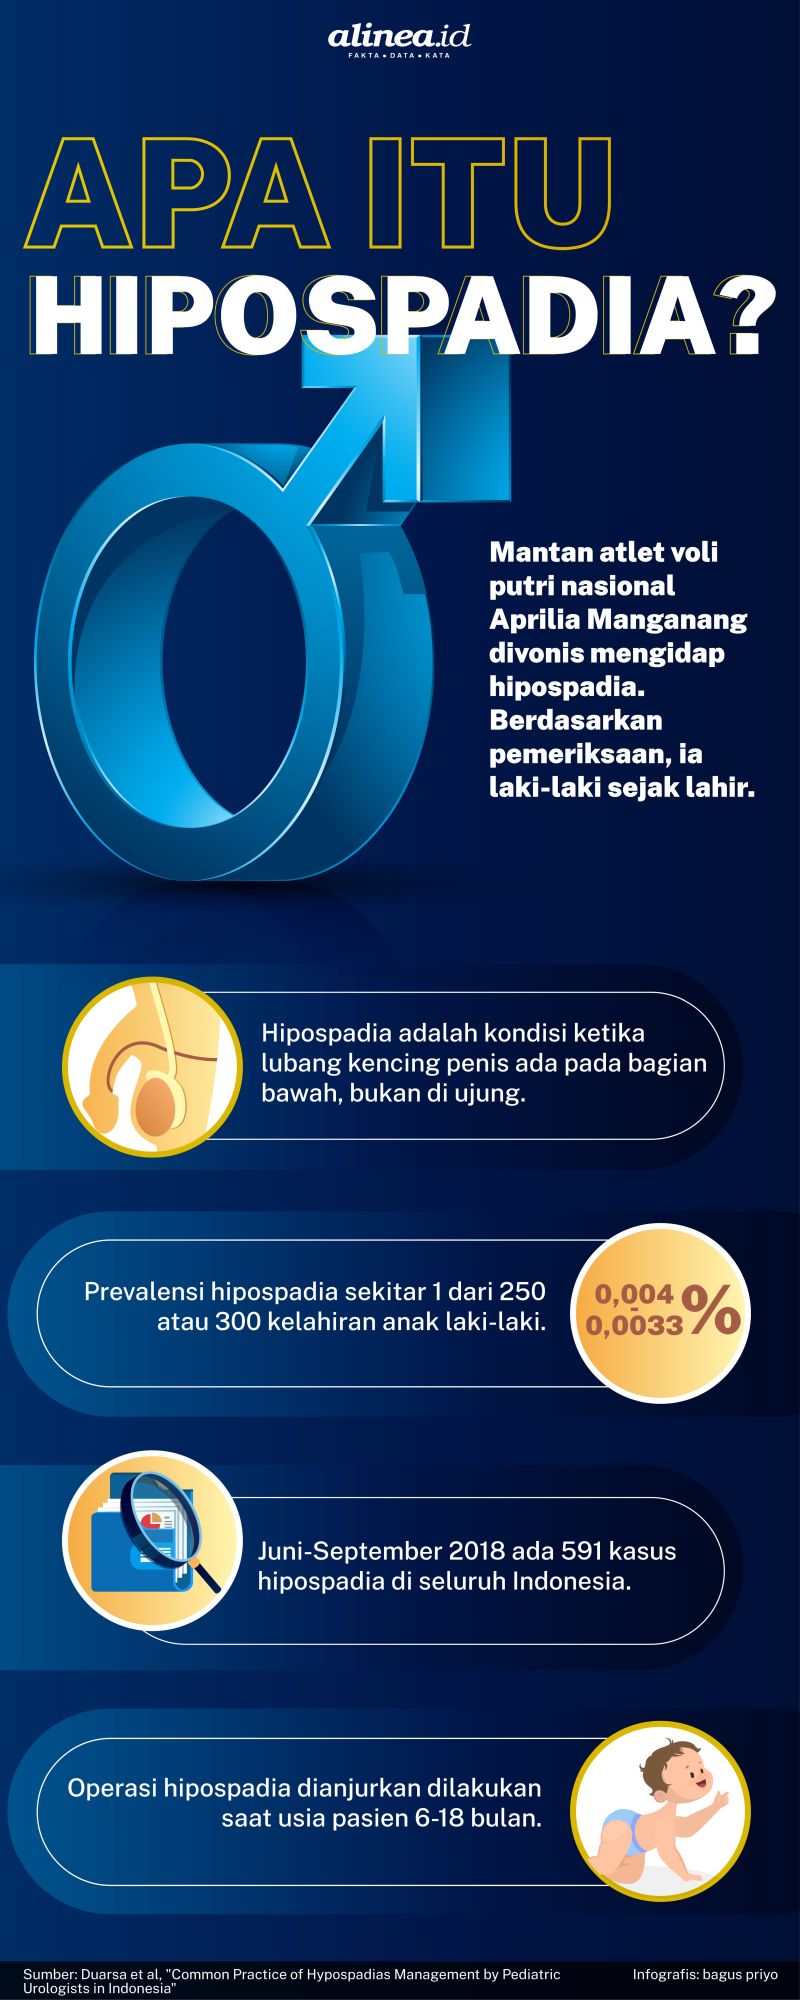 Infografik hipospadia. Alinea.id/Bagus Priyo.